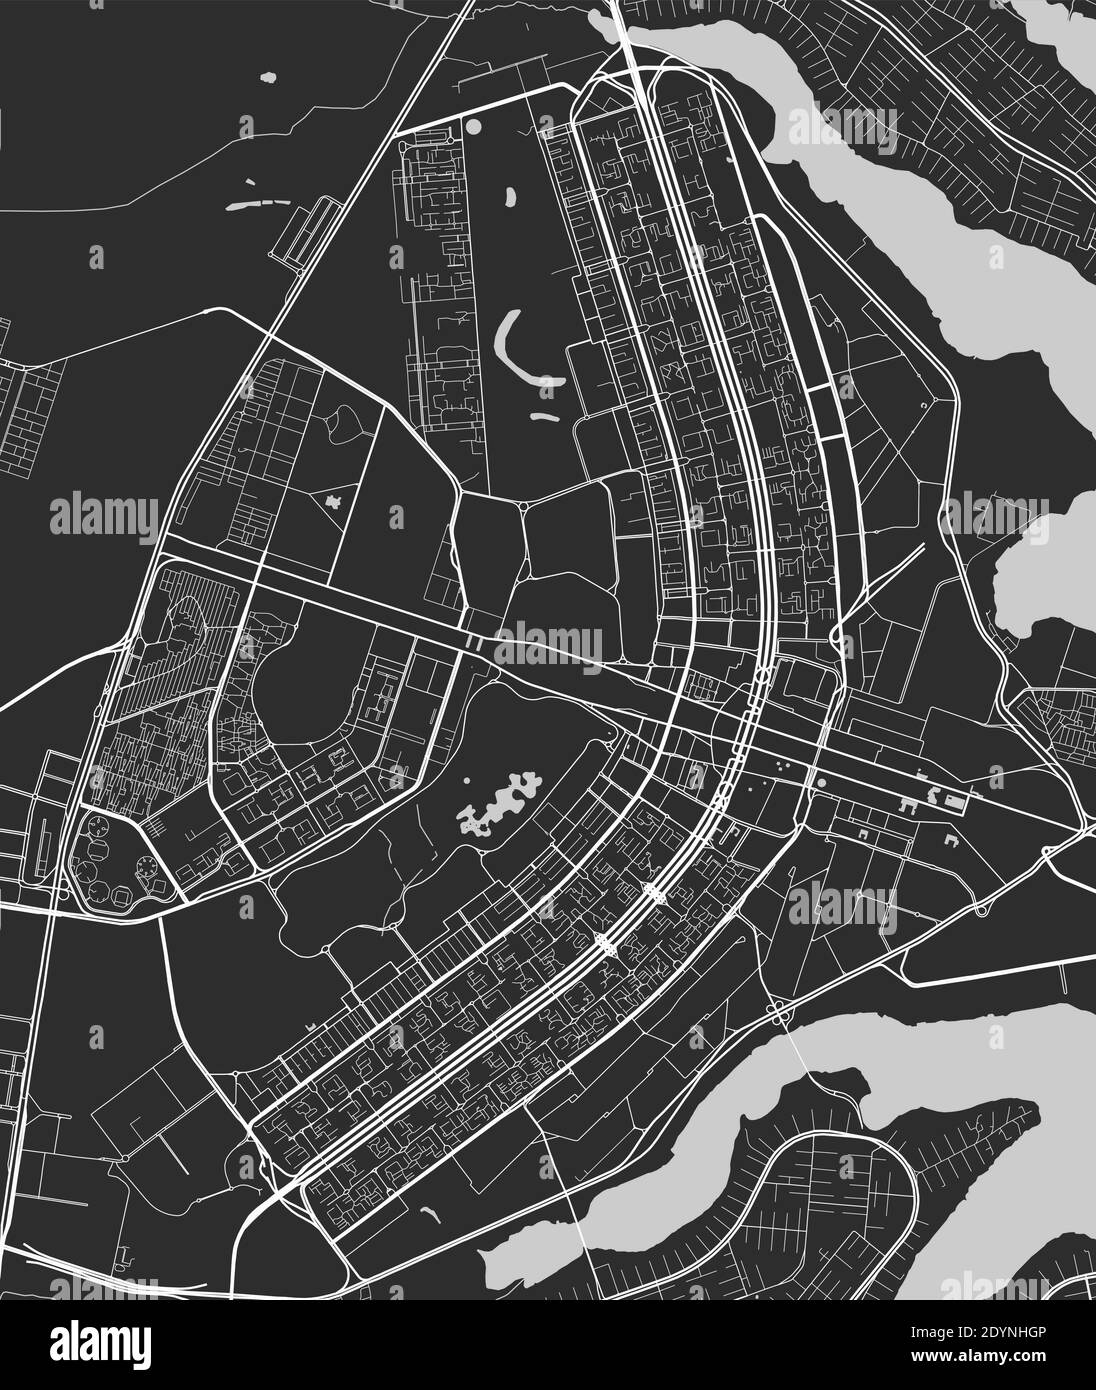 Stadtkarte von Brasilia. Vektor-Illustration, Brasilia Karte Graustufen Kunstposter. Straßenkarte mit Straßen, Ansicht der Metropolregion. Stock Vektor